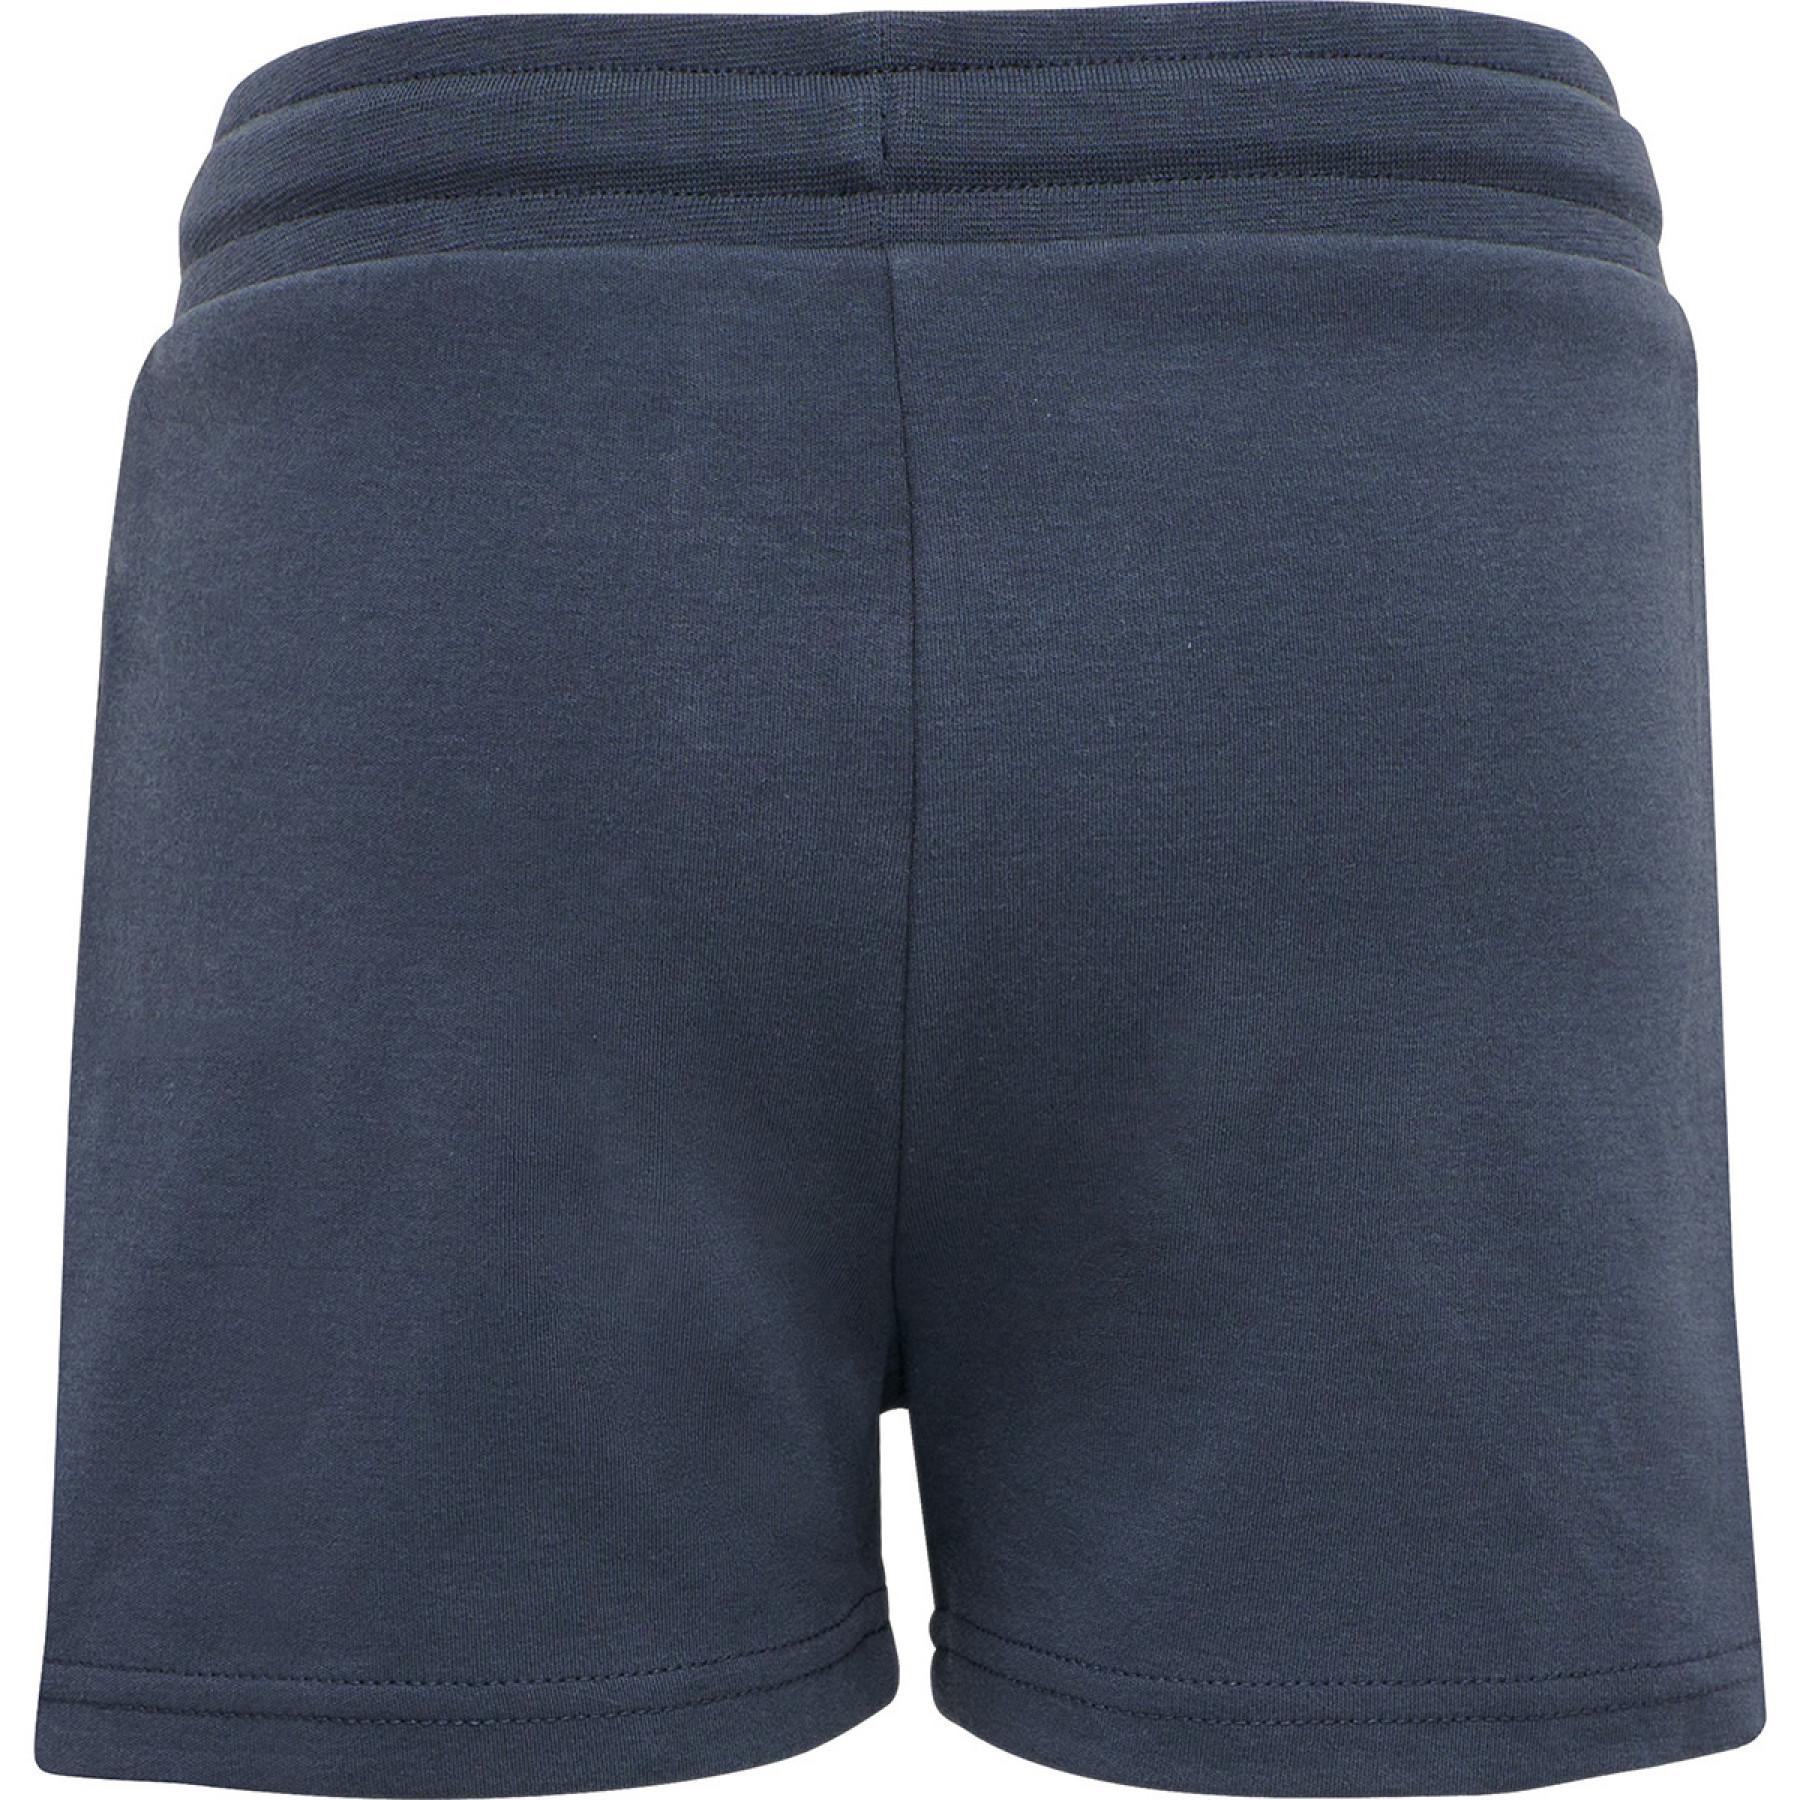 Children's shorts Hummel hmlnille